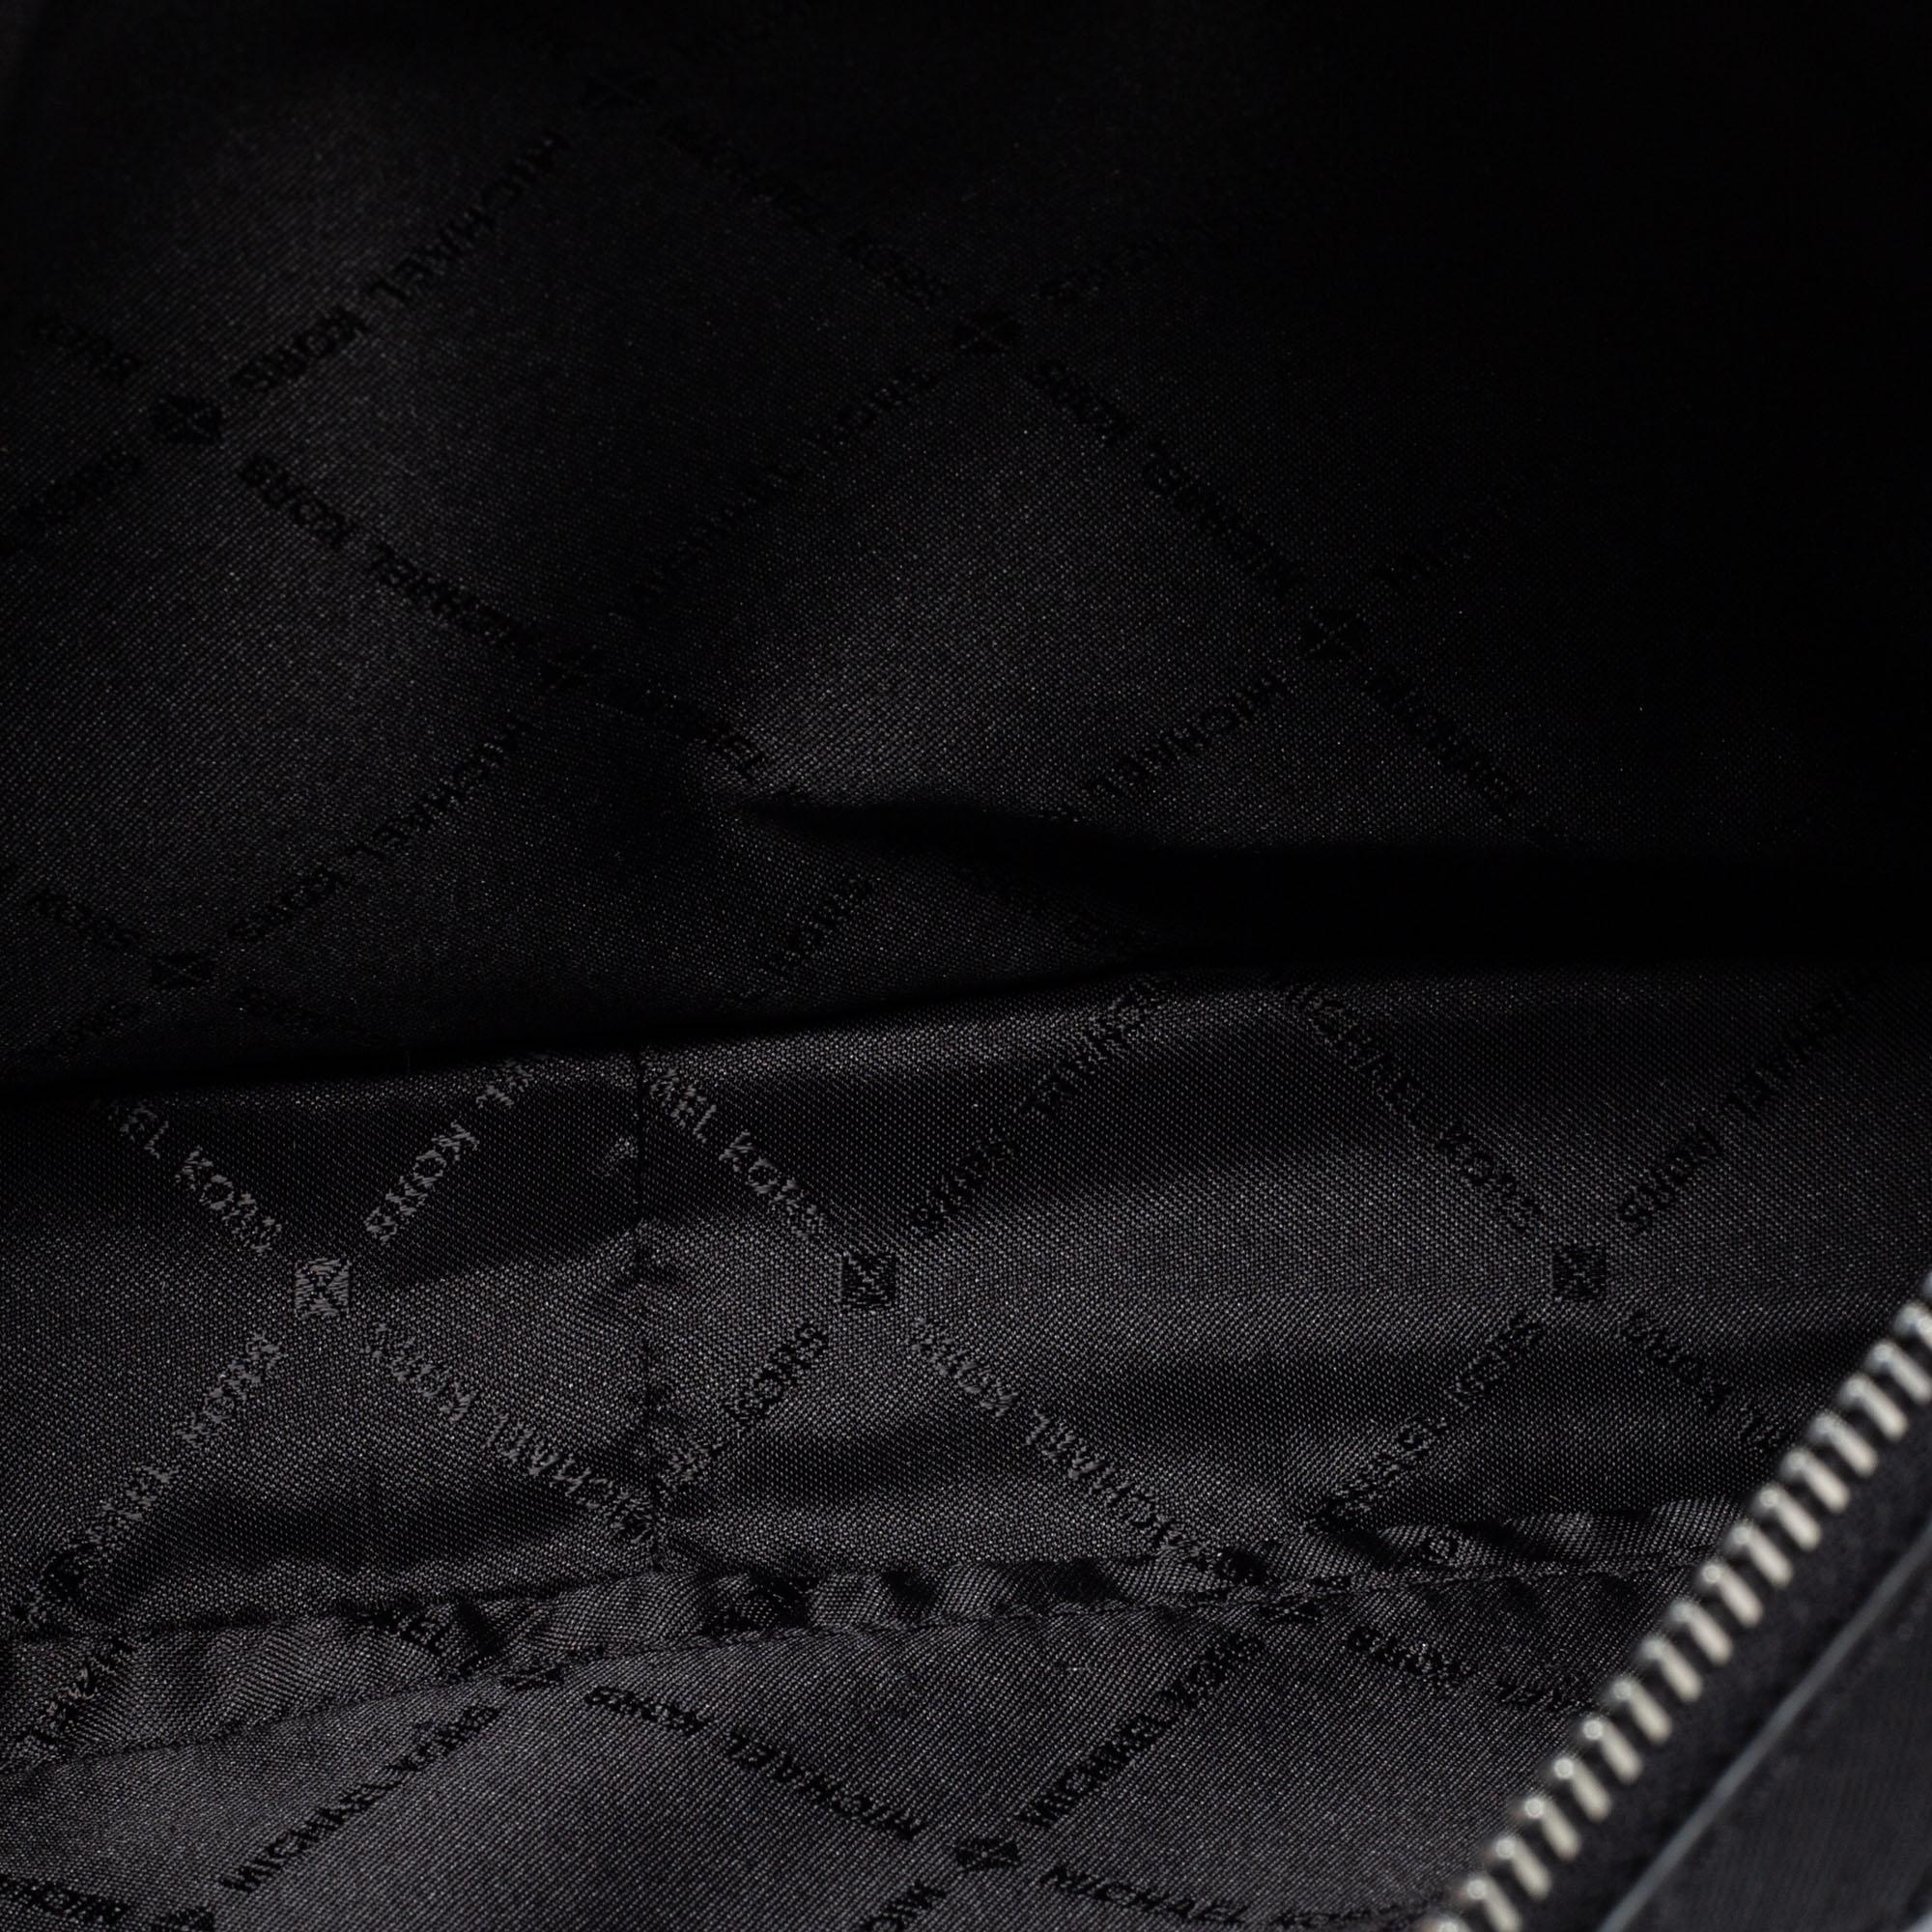 Michael Kors Black/Grey Signature Coated Canvas Leather Jet Set Crossbody Bag 7